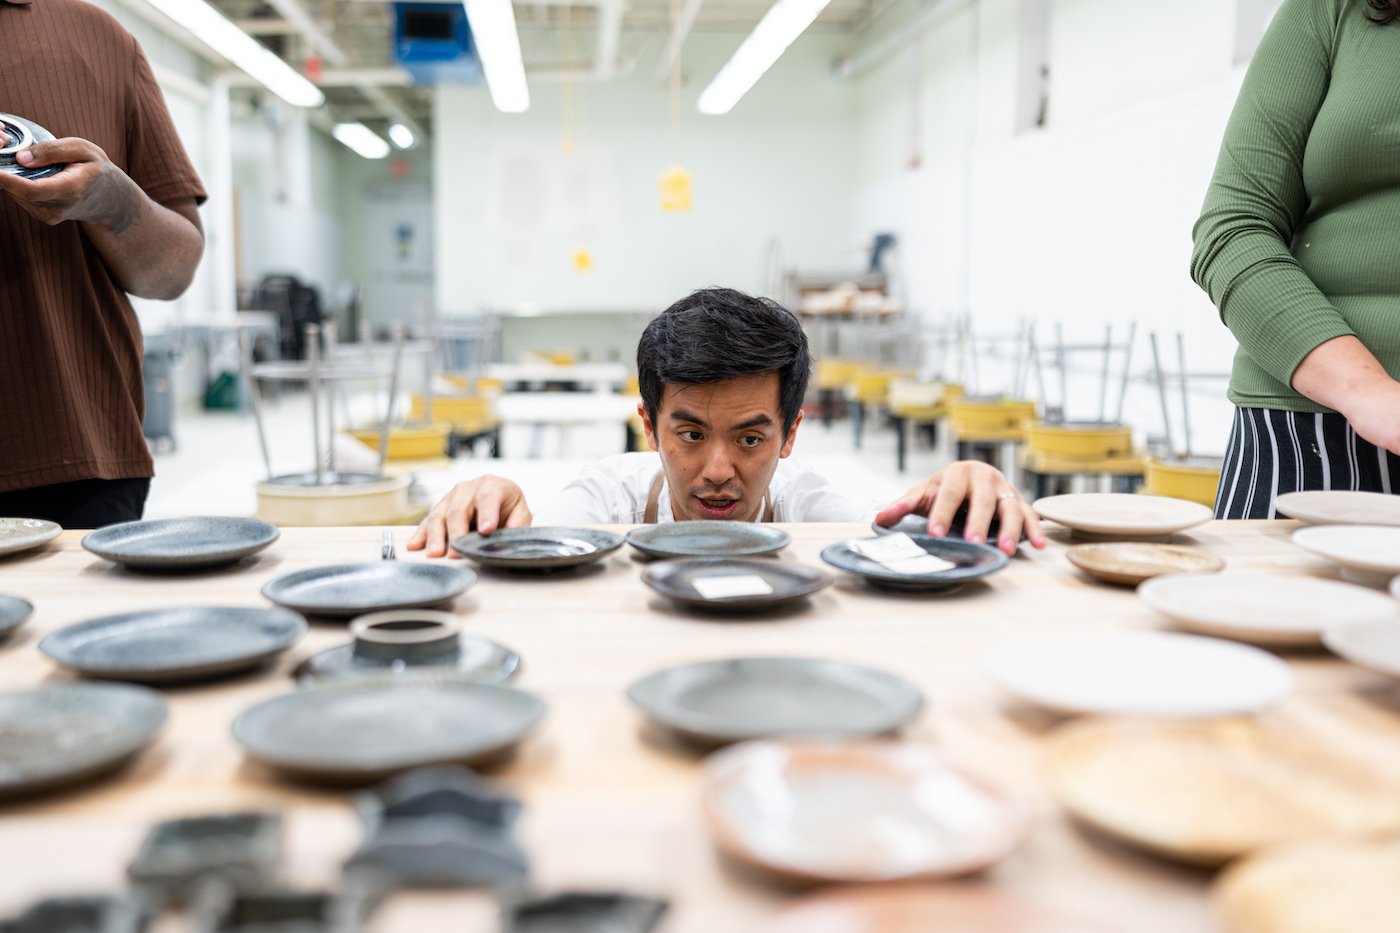 Executive Chef Hoon Rhee studies students' plateware